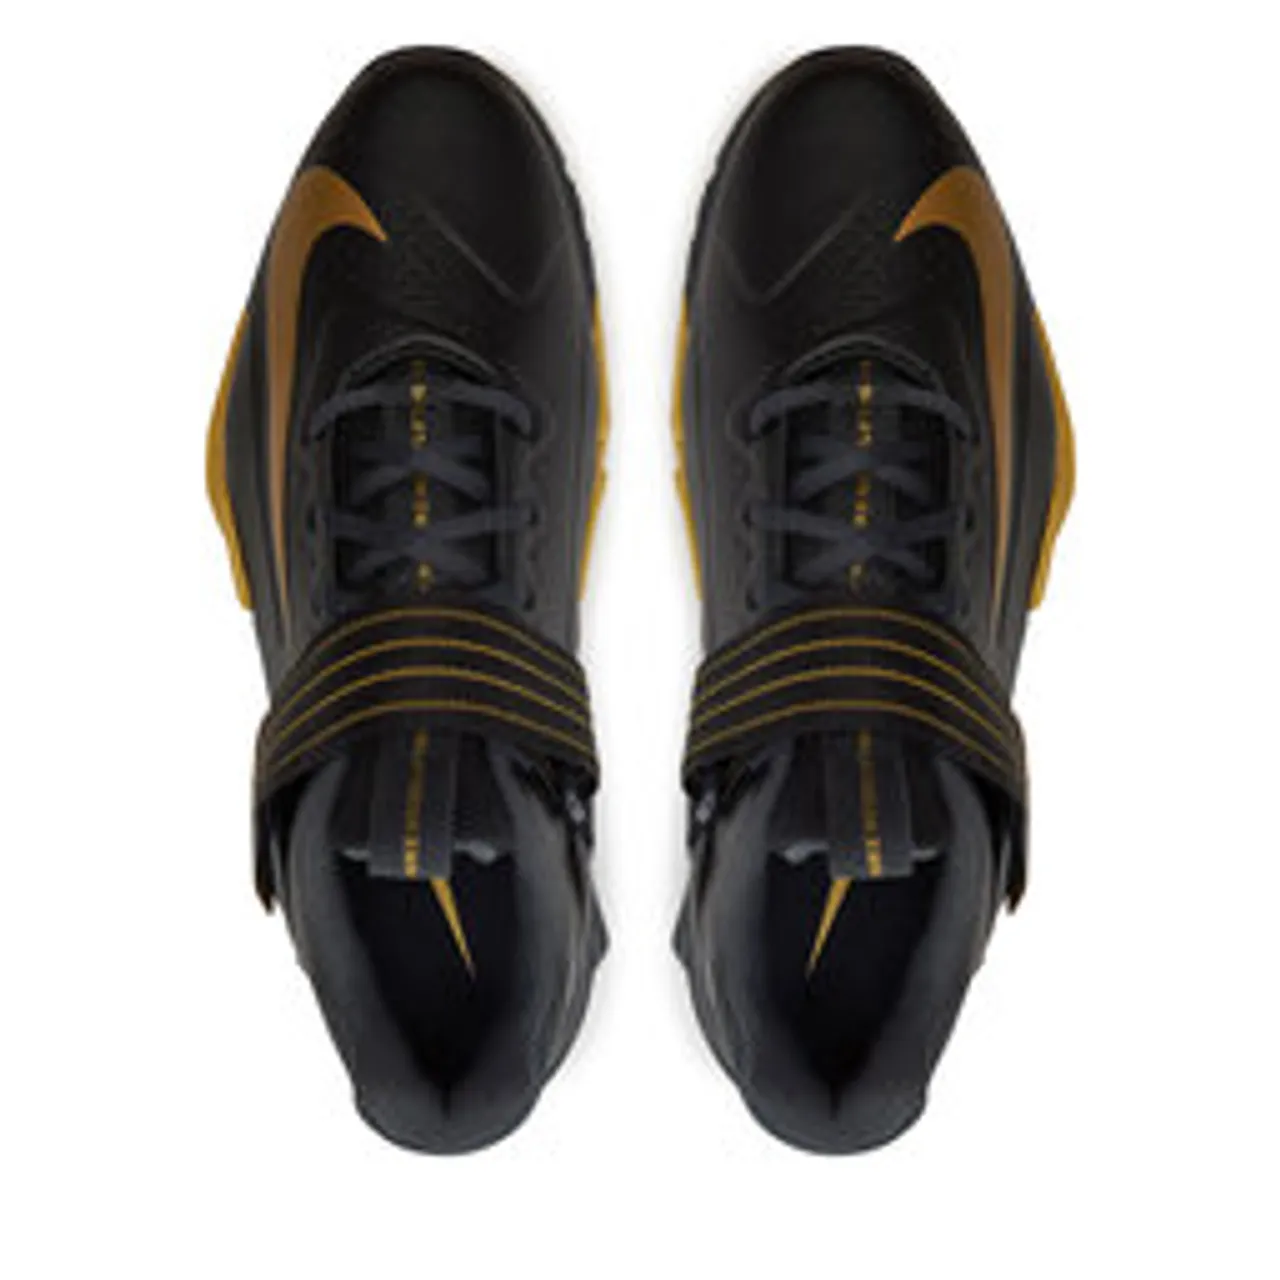 Schuhe Nike Savaleos CV5708 001 Black/Metallic Gold/Anthracite